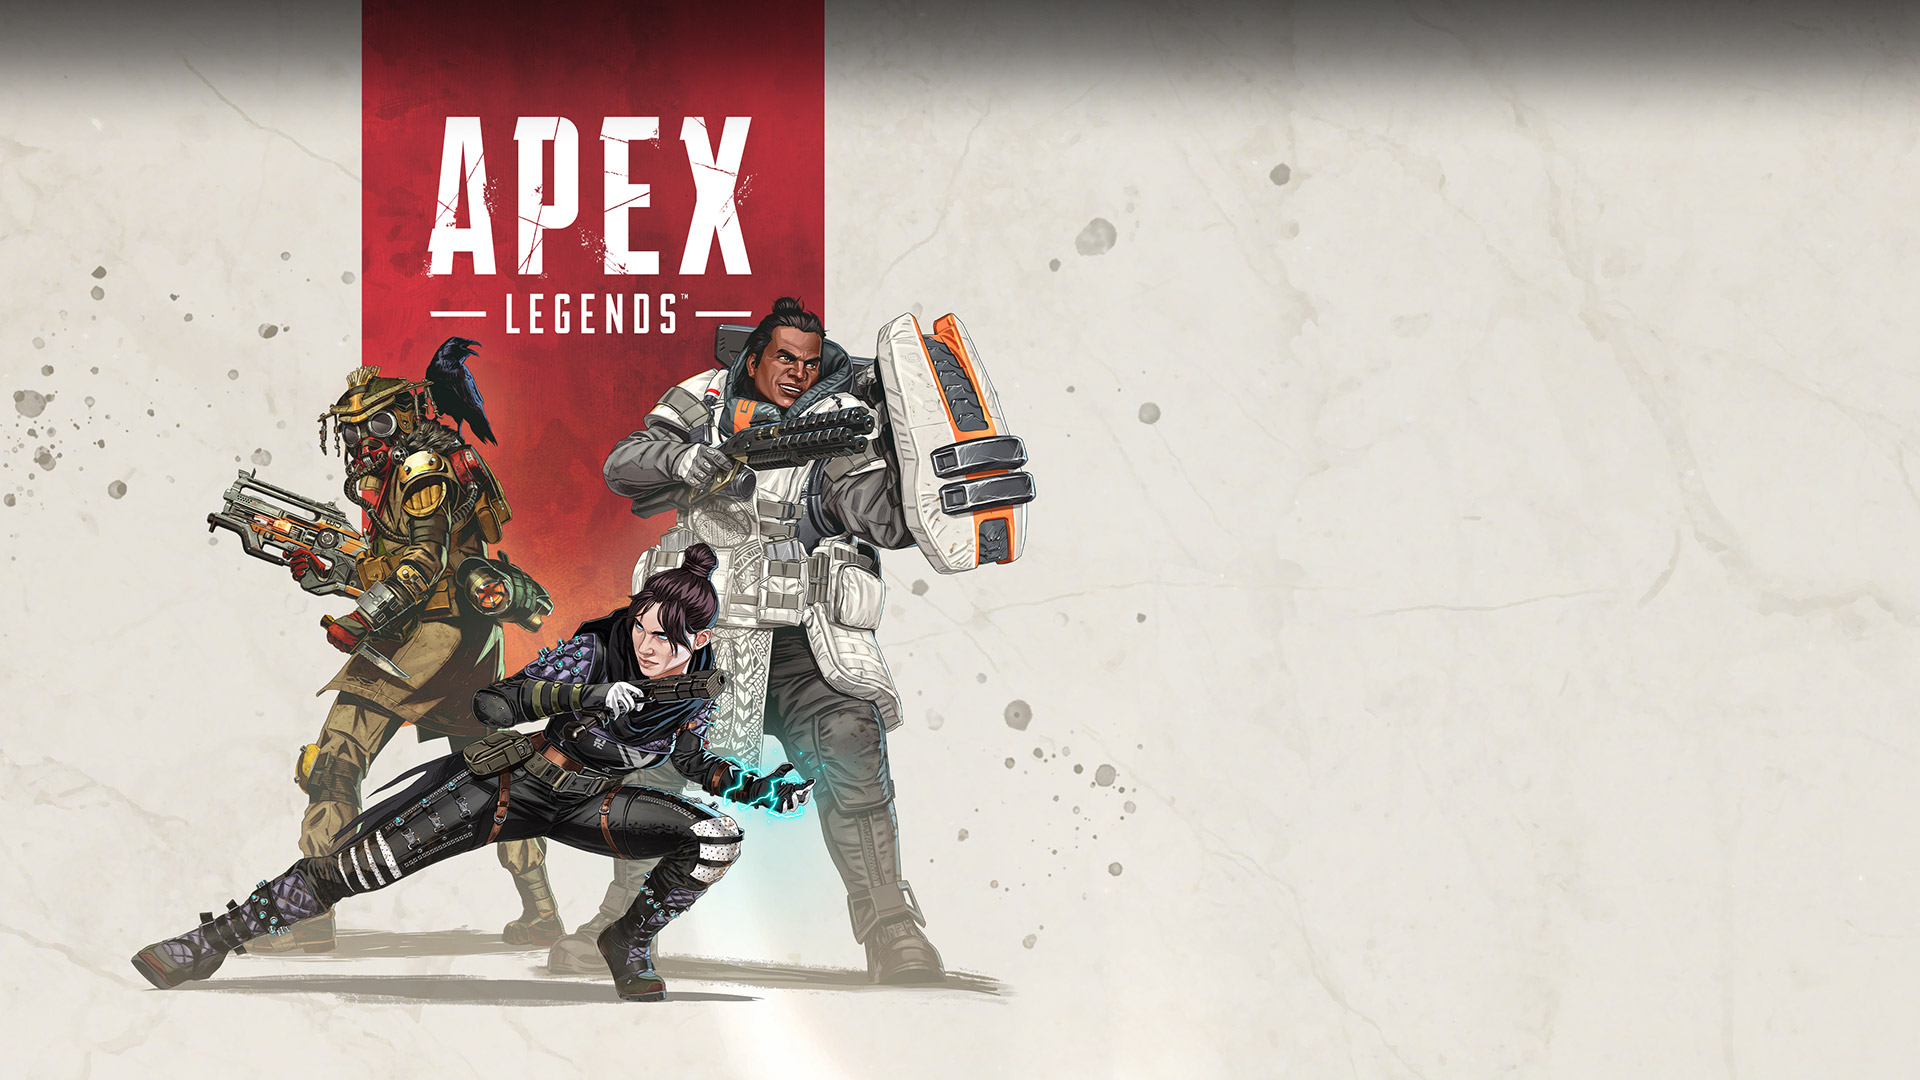 Apex Legends, tres clases de personajes posan preparados para la batalla.